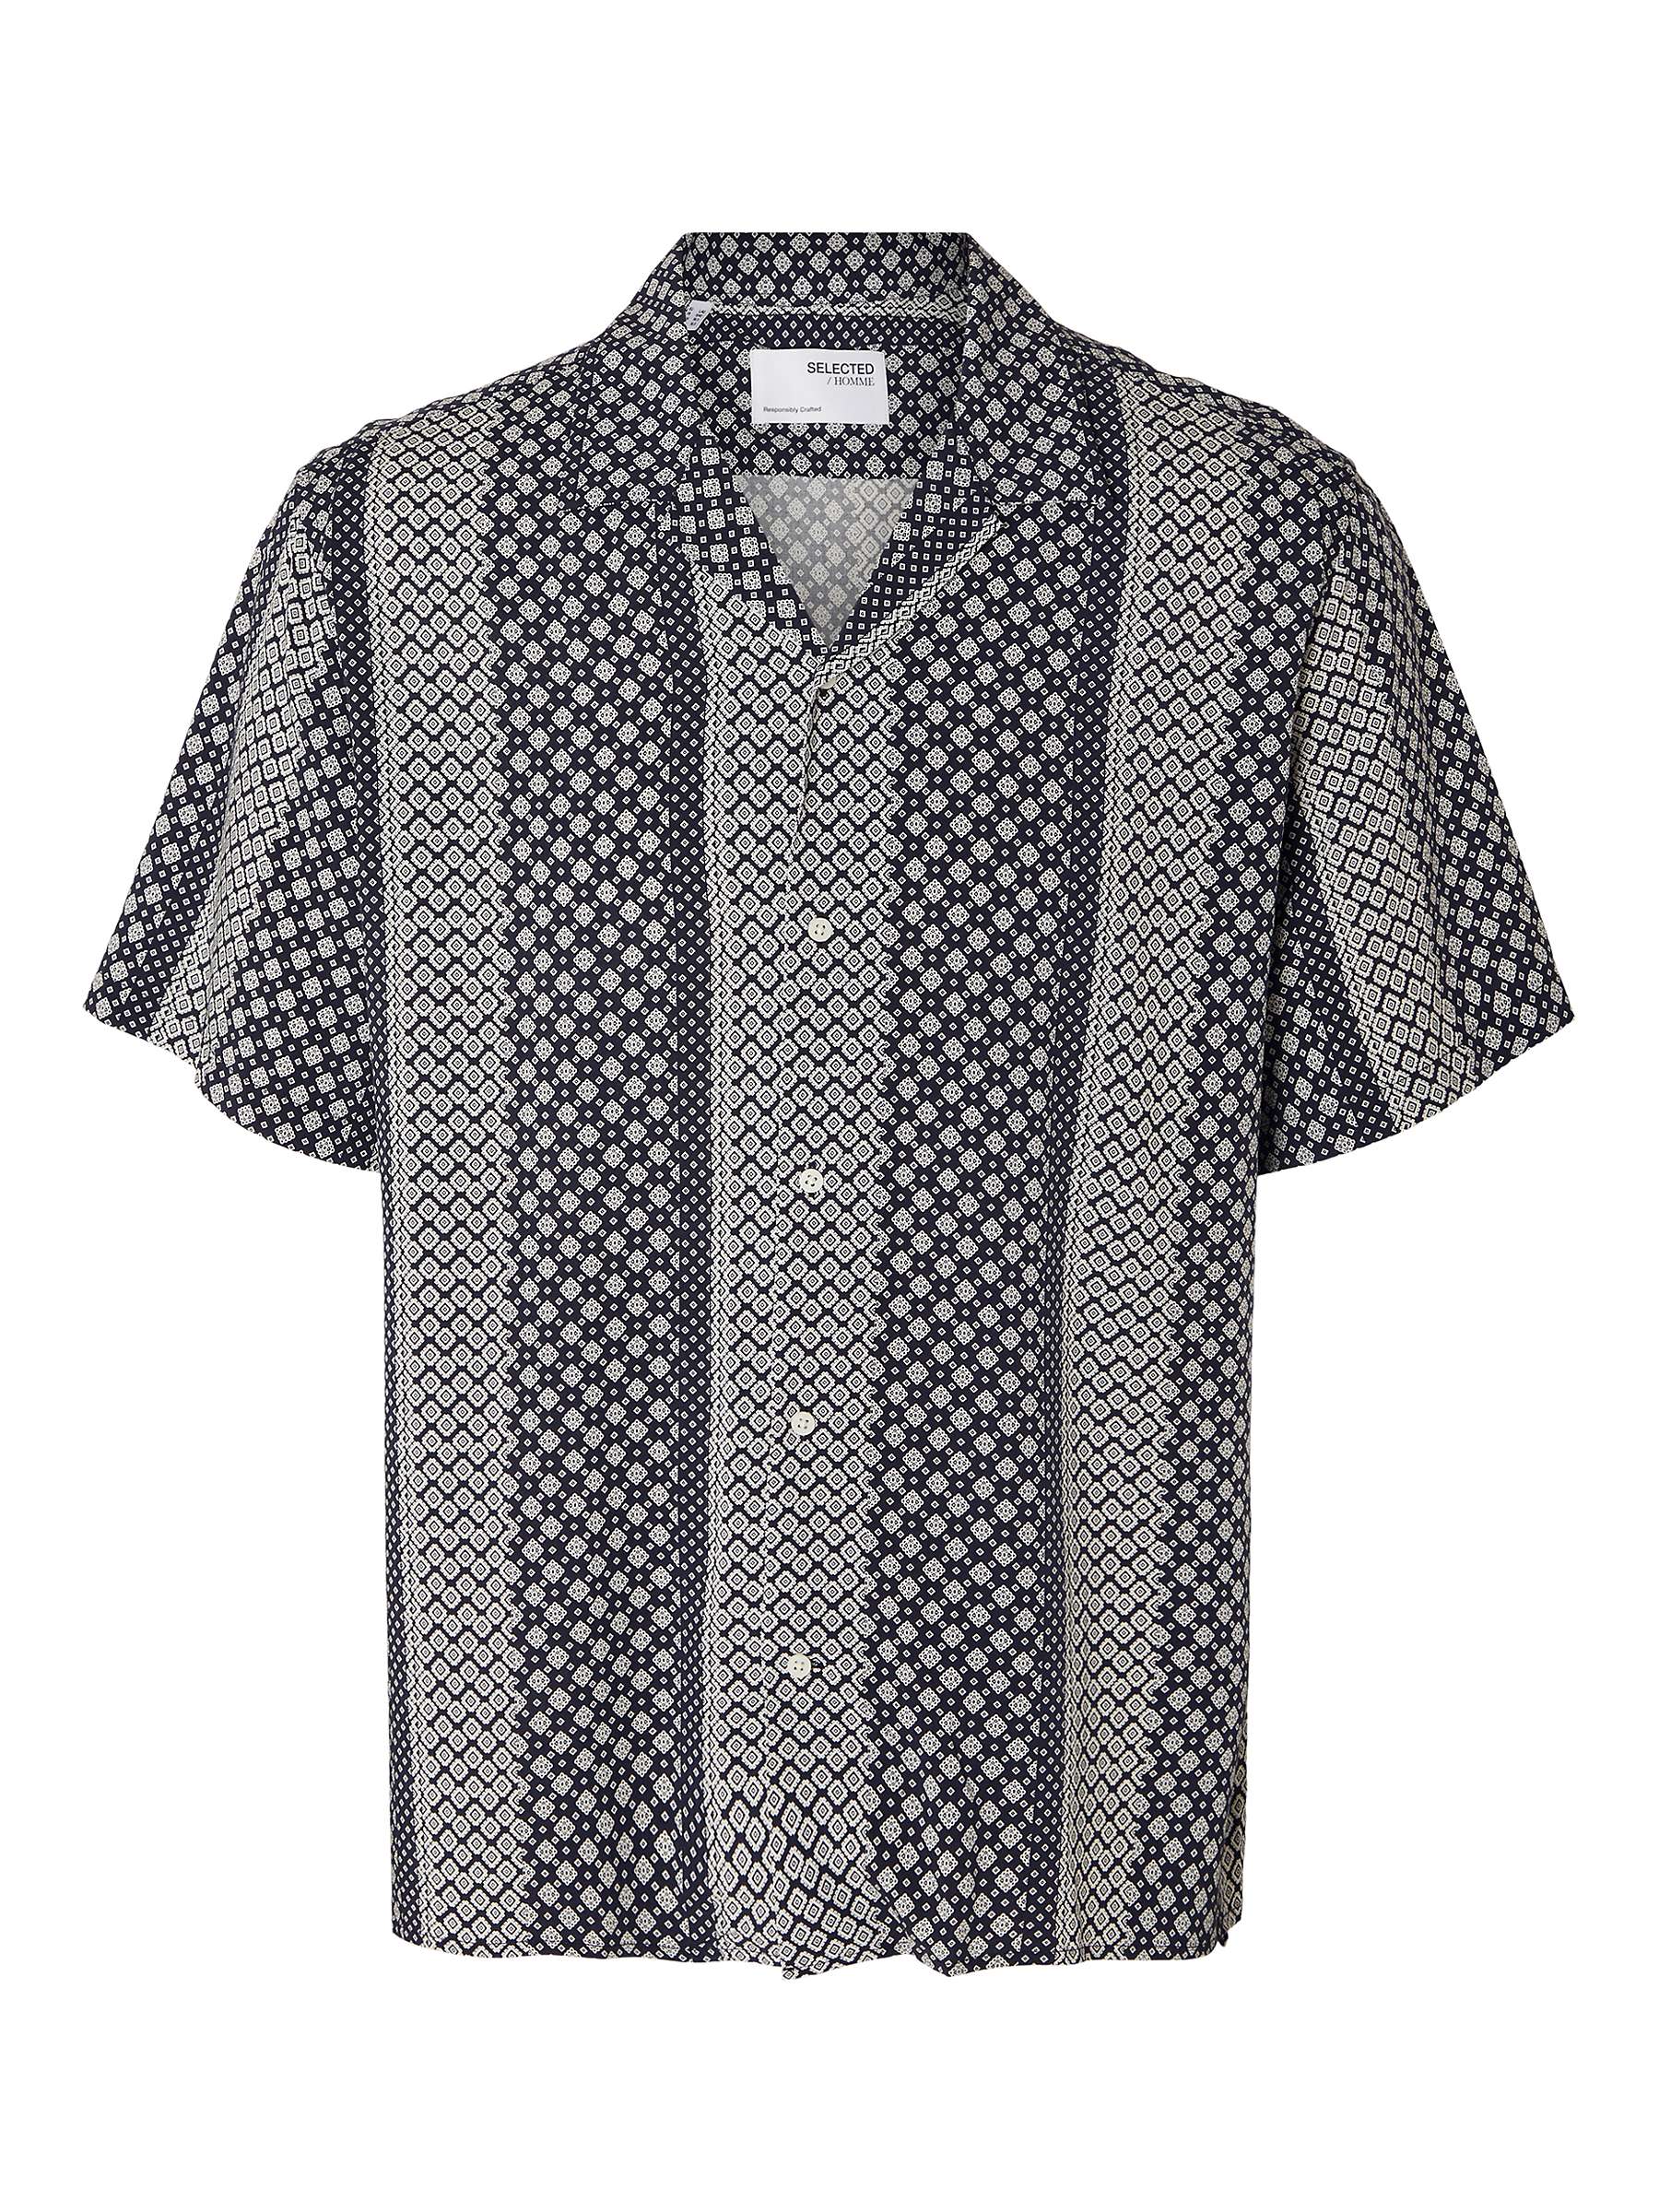 Buy SELECTED HOMME Vero Geometric Print Short Sleeve Shirt, Sky Captain/Multi Online at johnlewis.com